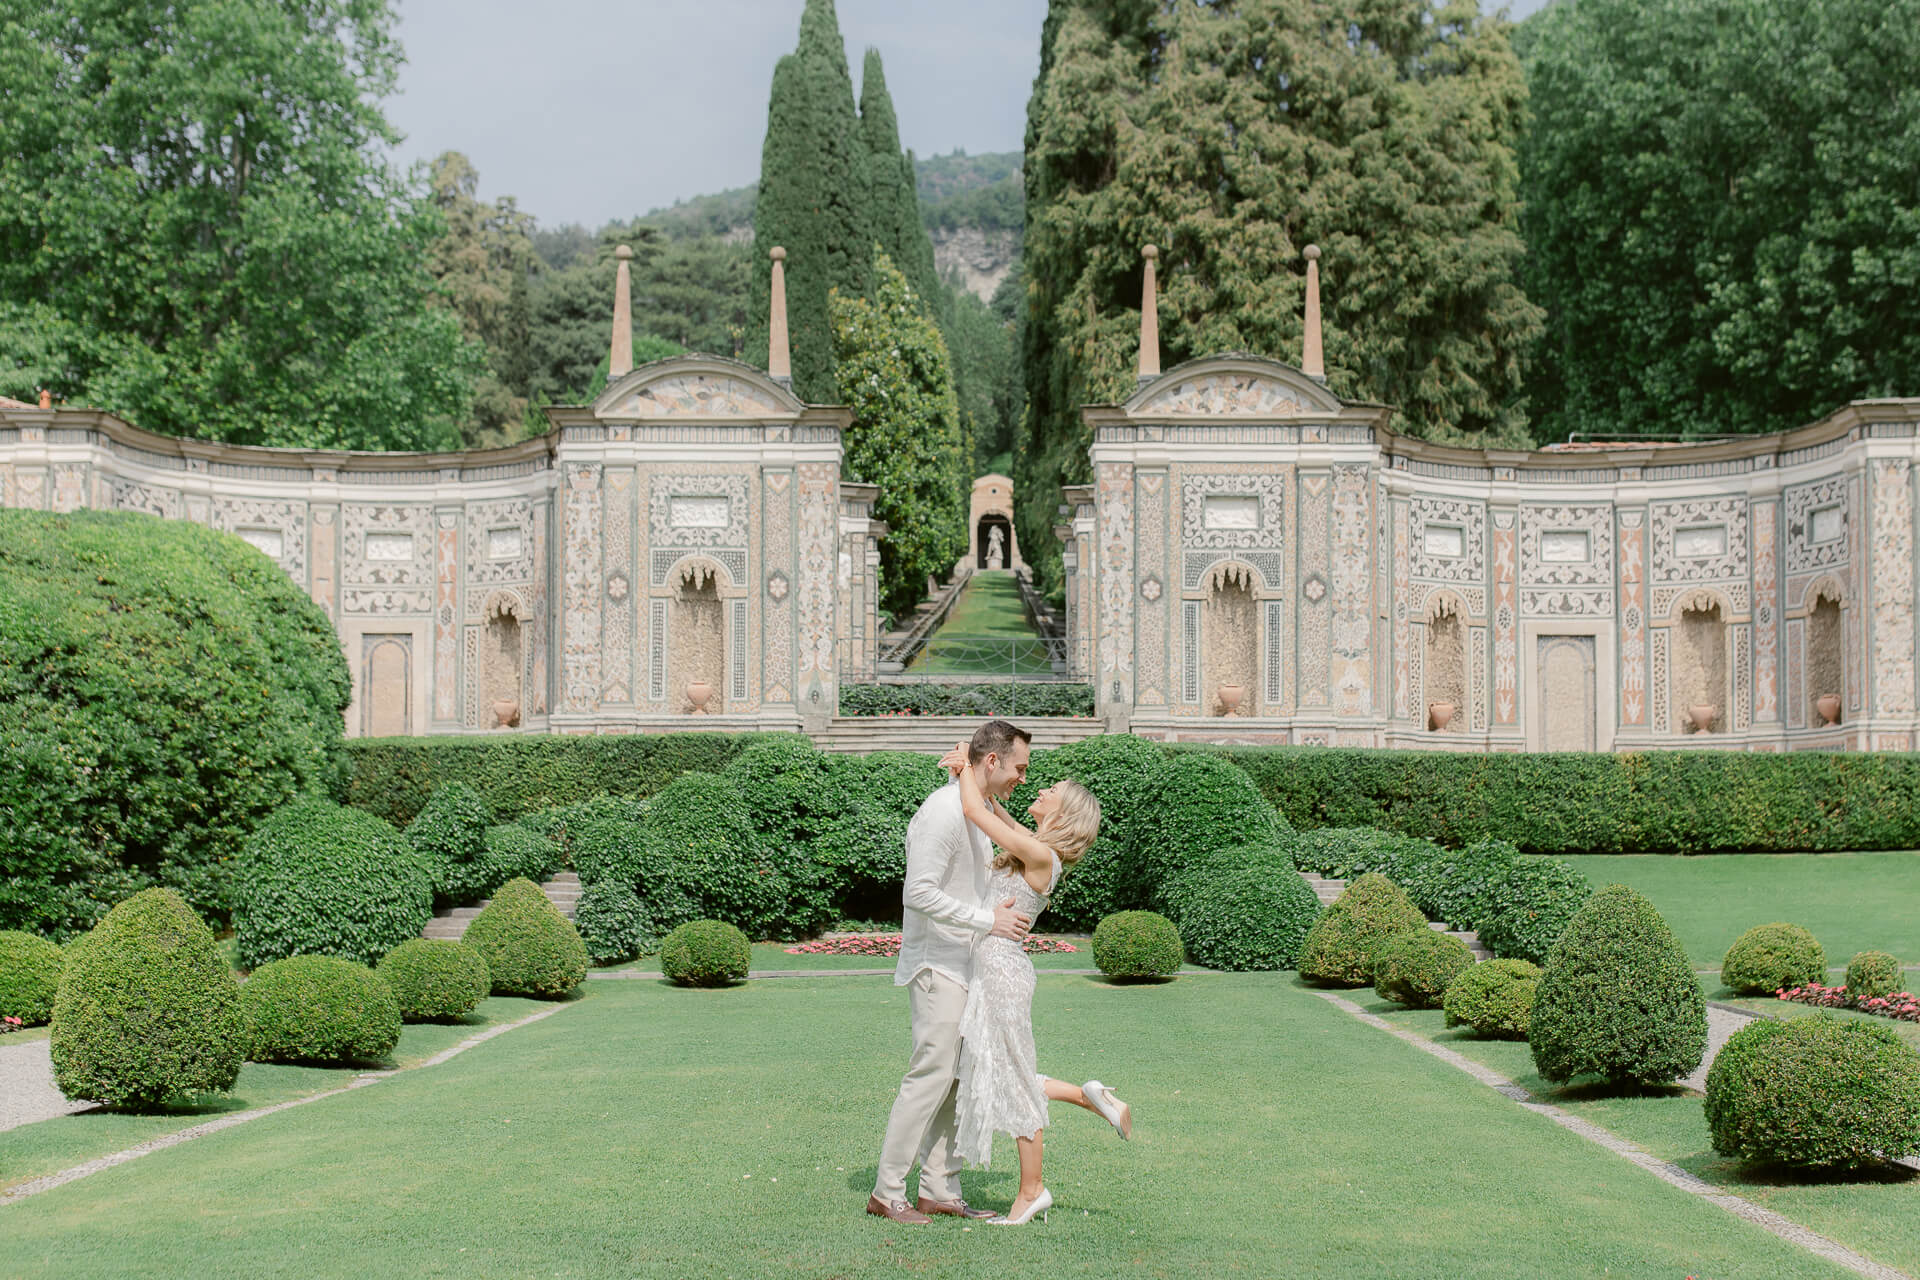 Official Website of Villa d'Este in Cernobbio